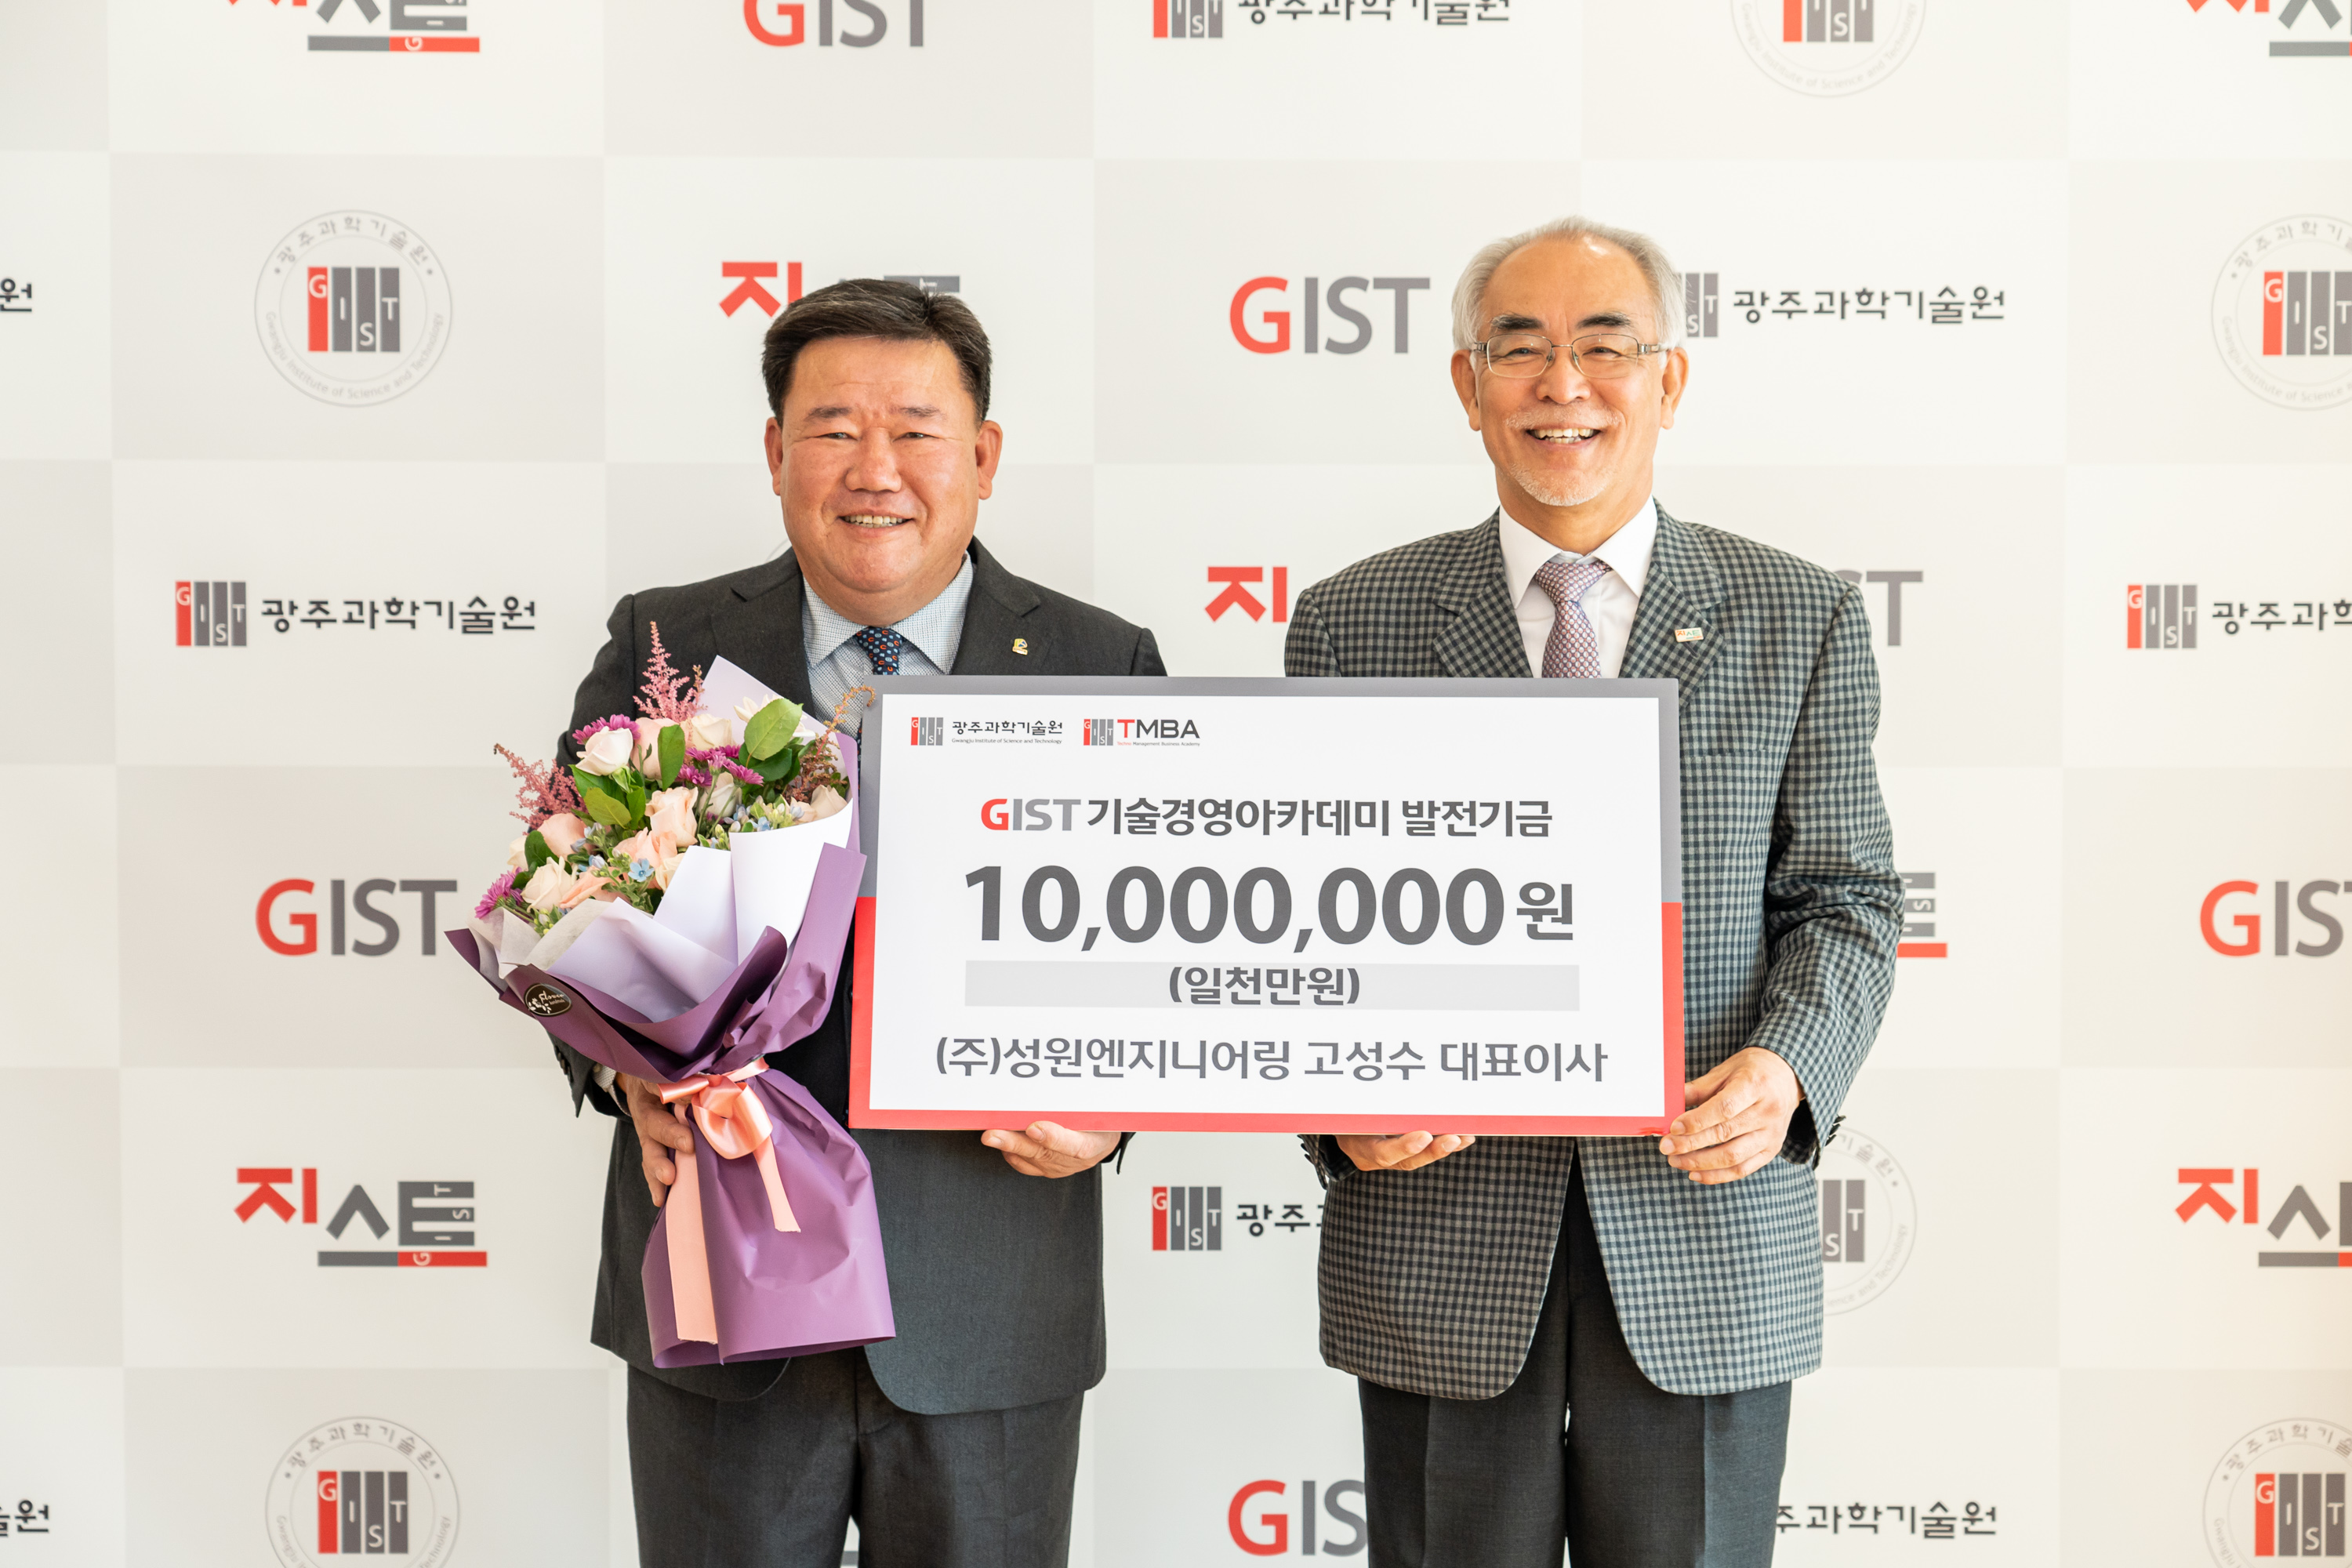 Seong-soo Koh, CEO of Sungwon Engineering Co., Ltd., donated 10 million won to GIST 이미지